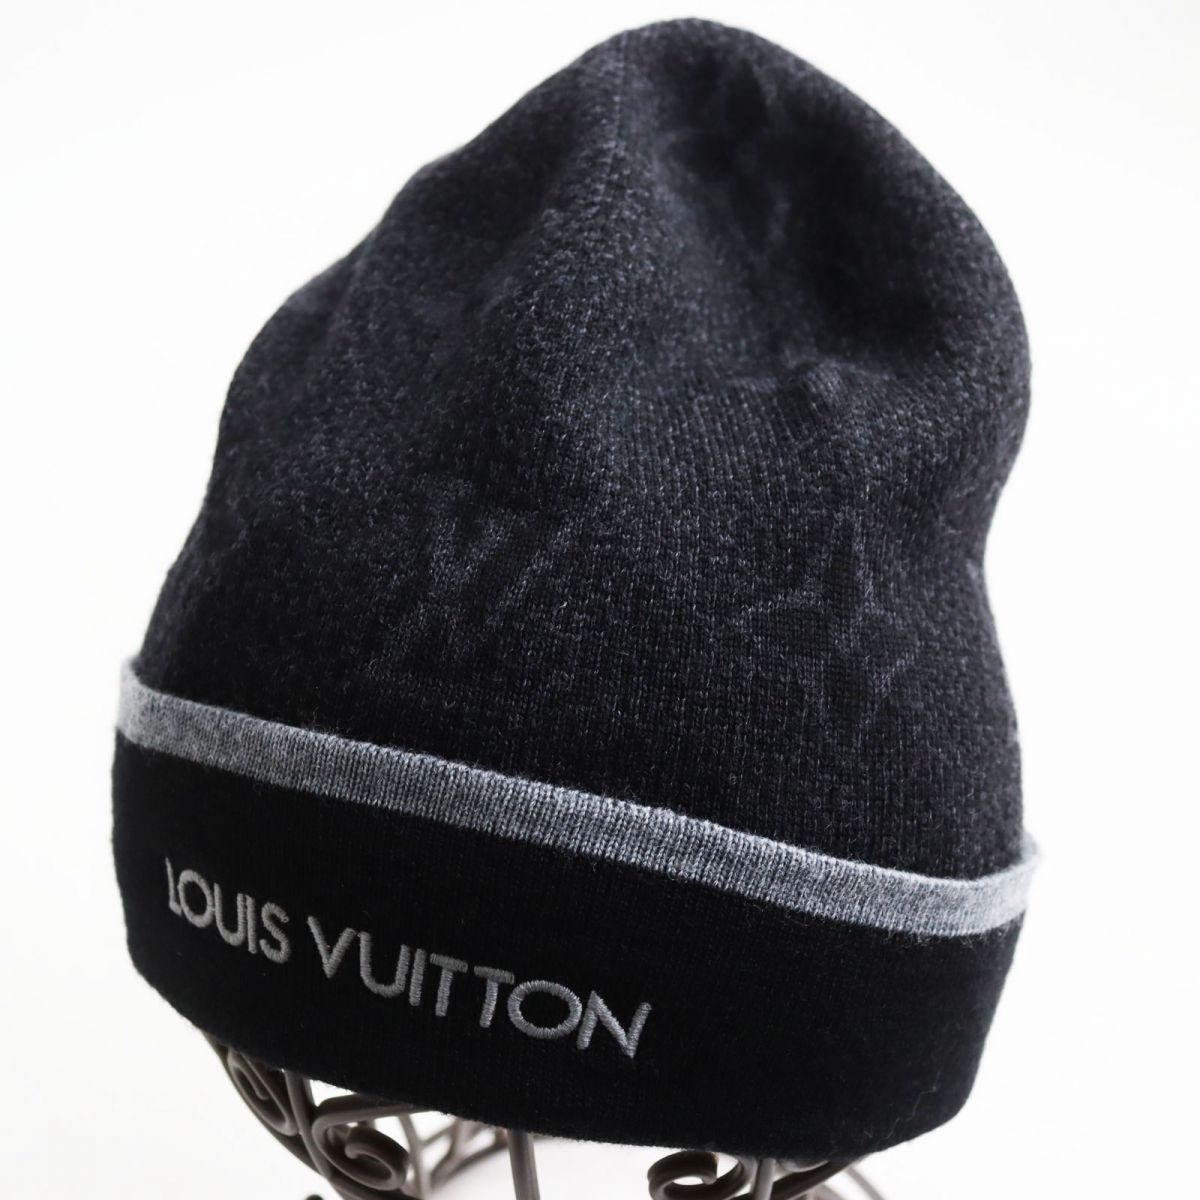 Louis Vuittonウール%ニット帽 ルイヴィトン ブラック